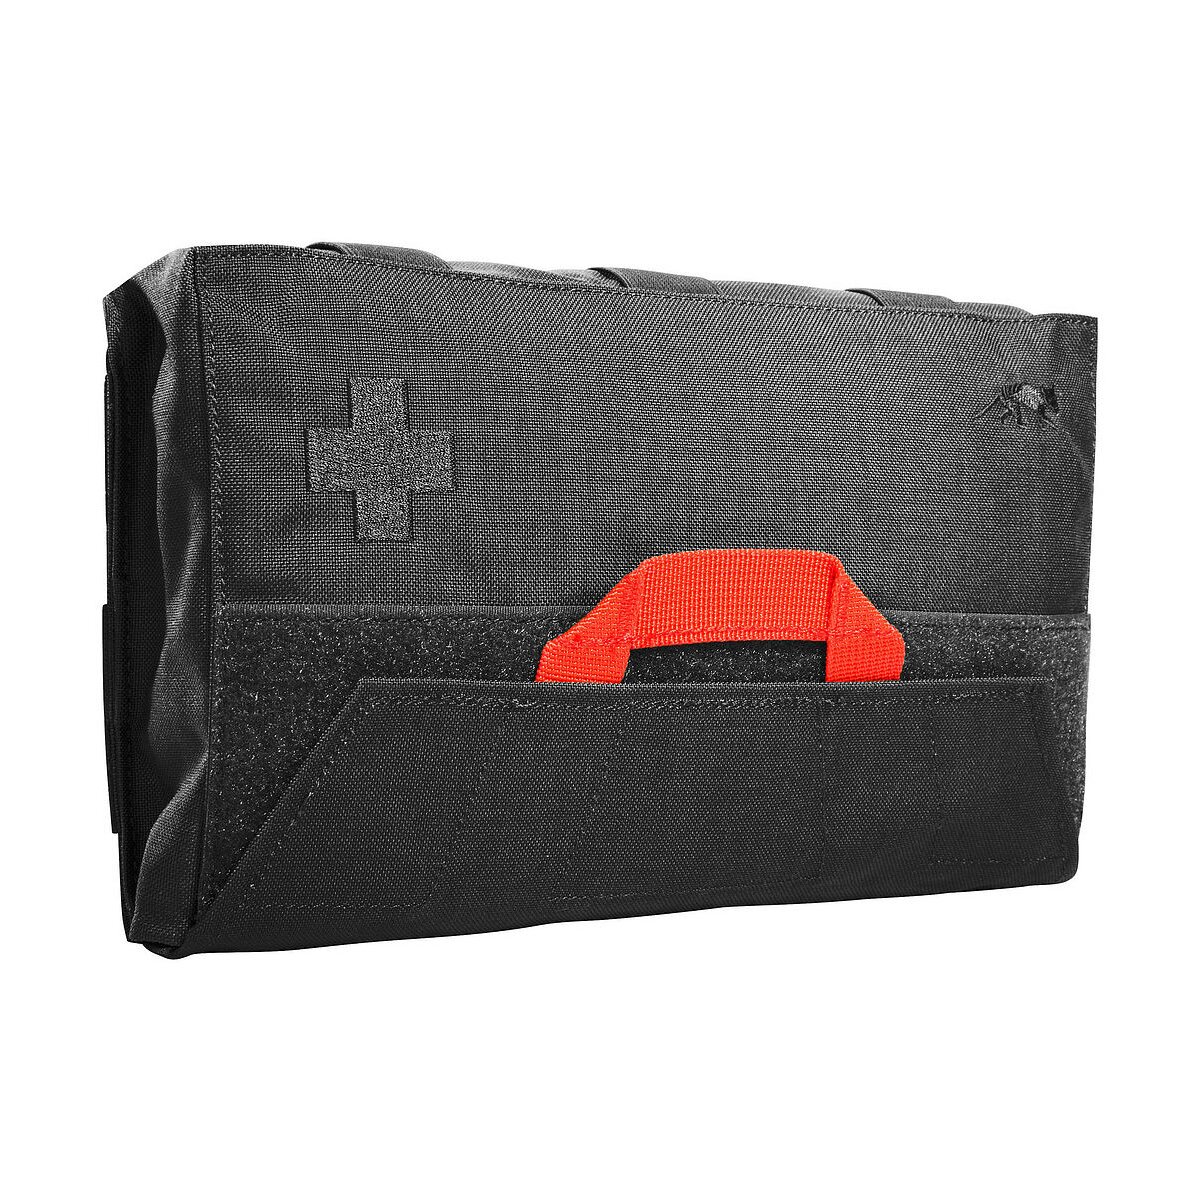 TT IFAK Pouch First Aid Kit, 38,00 €